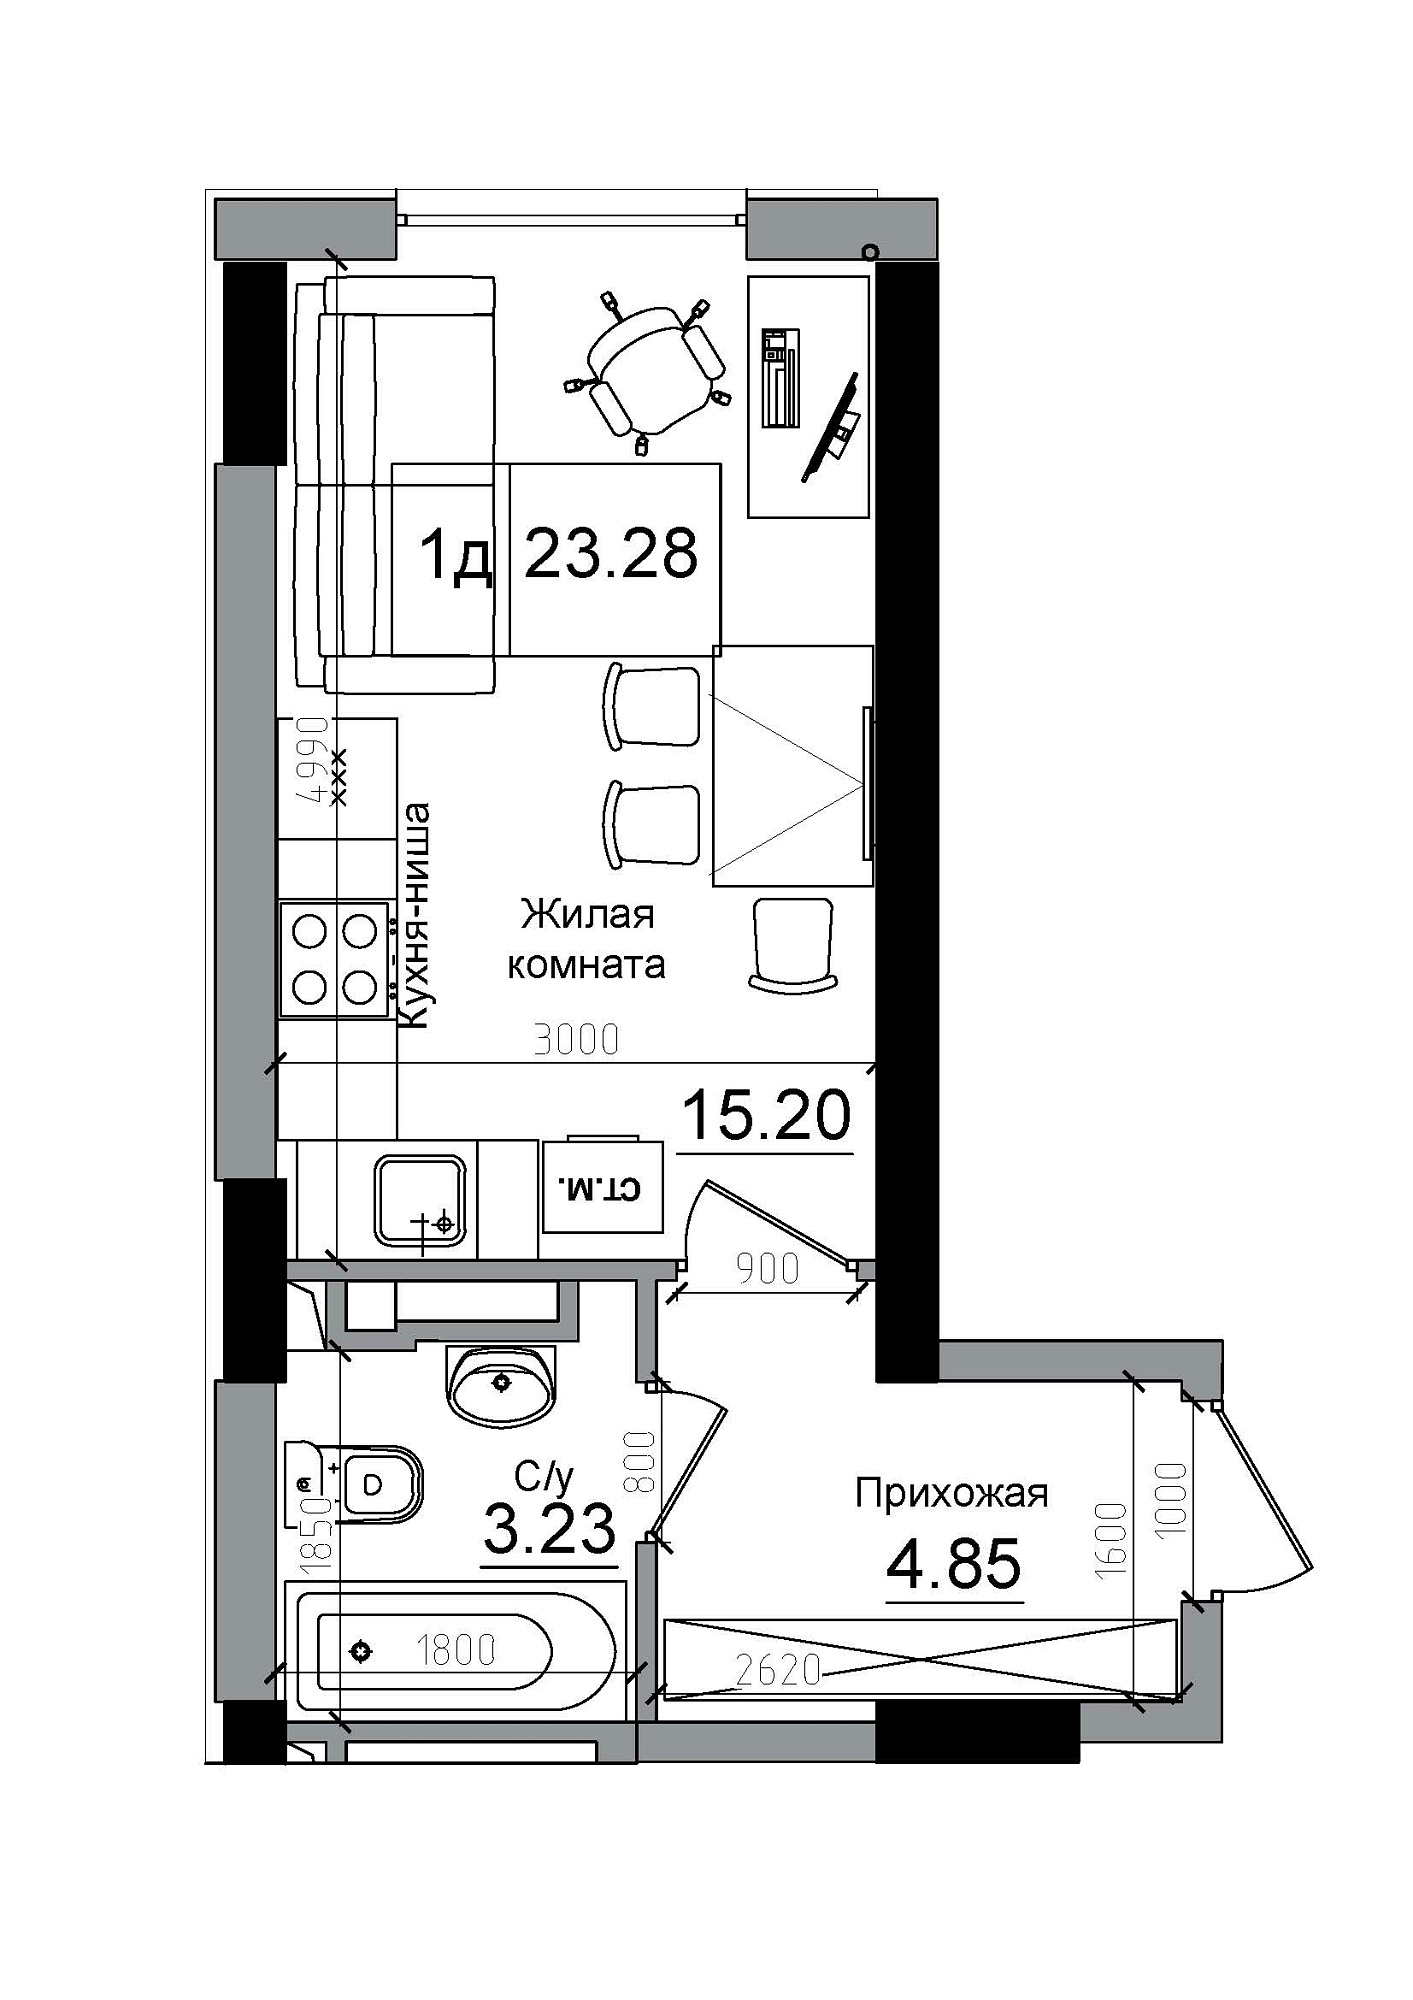 Planning Smart flats area 23.28m2, AB-12-04/00005.